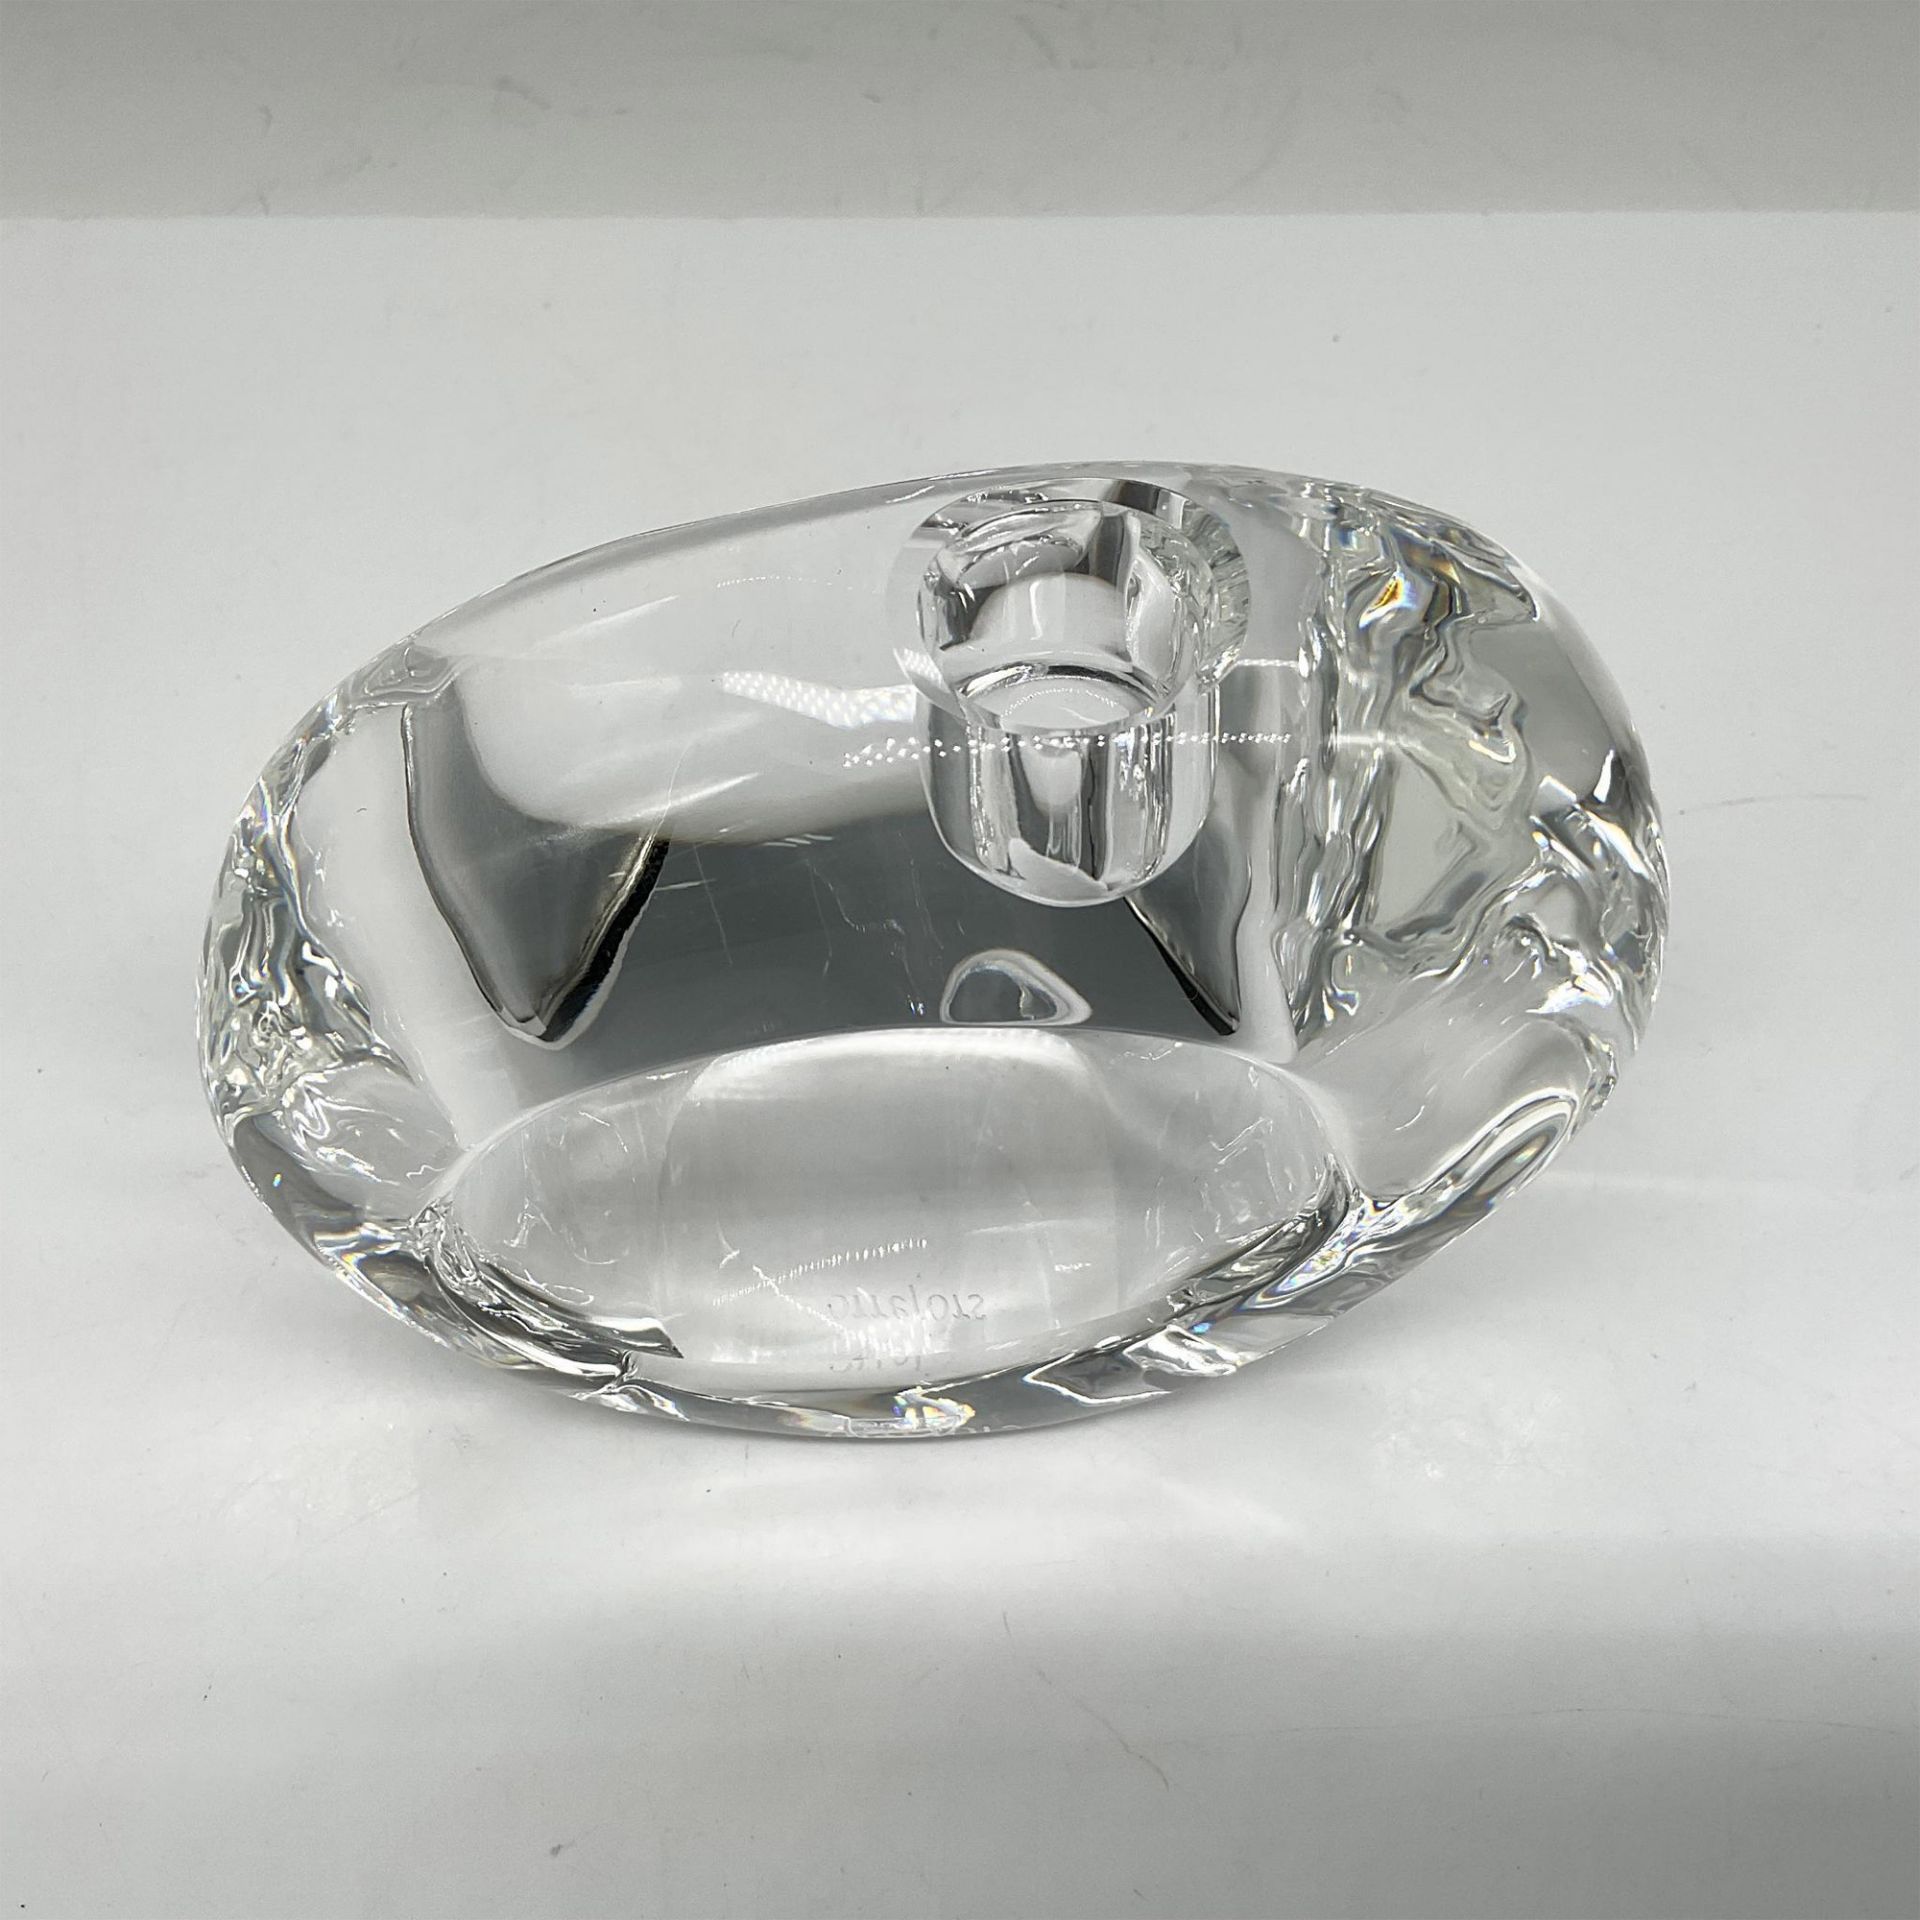 Orrefors Crystal Oval Candle Holder - Image 3 of 5